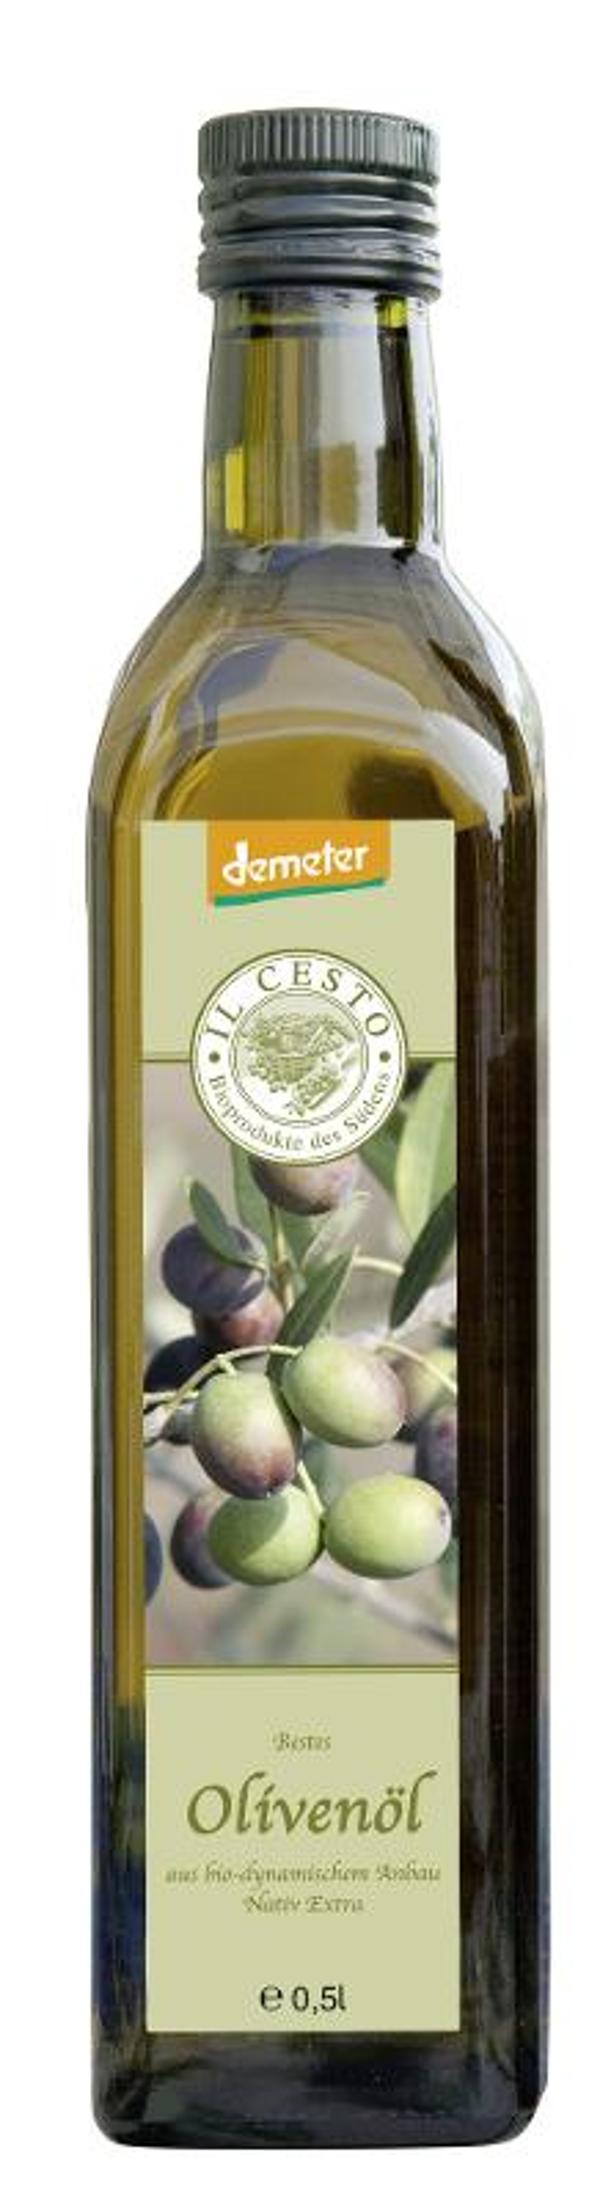 Produktfoto zu Olivenöl Demeter nativ extra